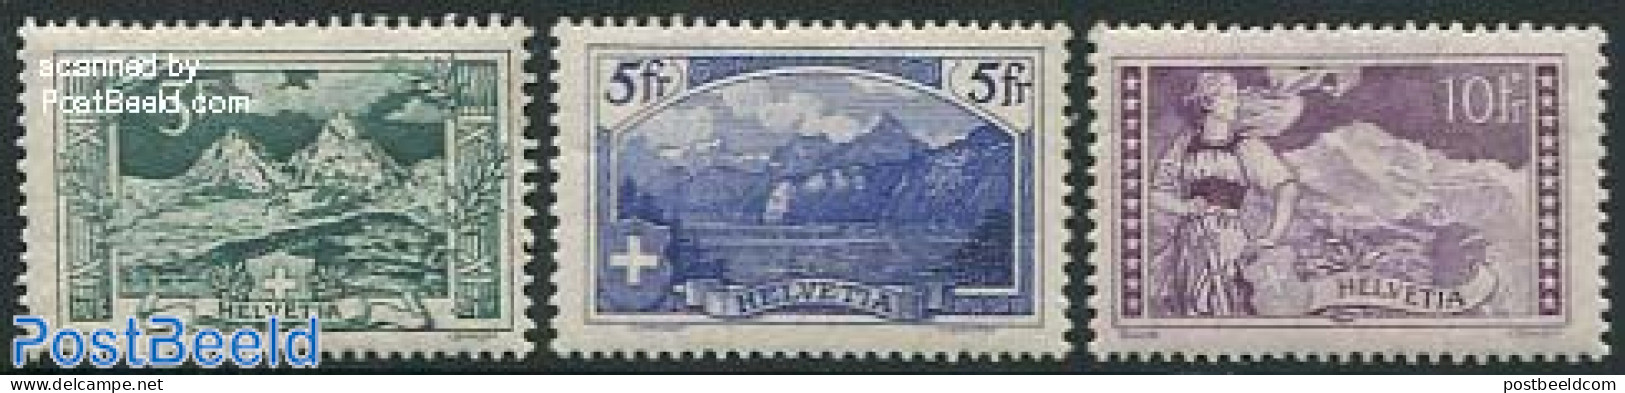 Switzerland 1914 Definitives 3v, Unused (hinged) - Ongebruikt